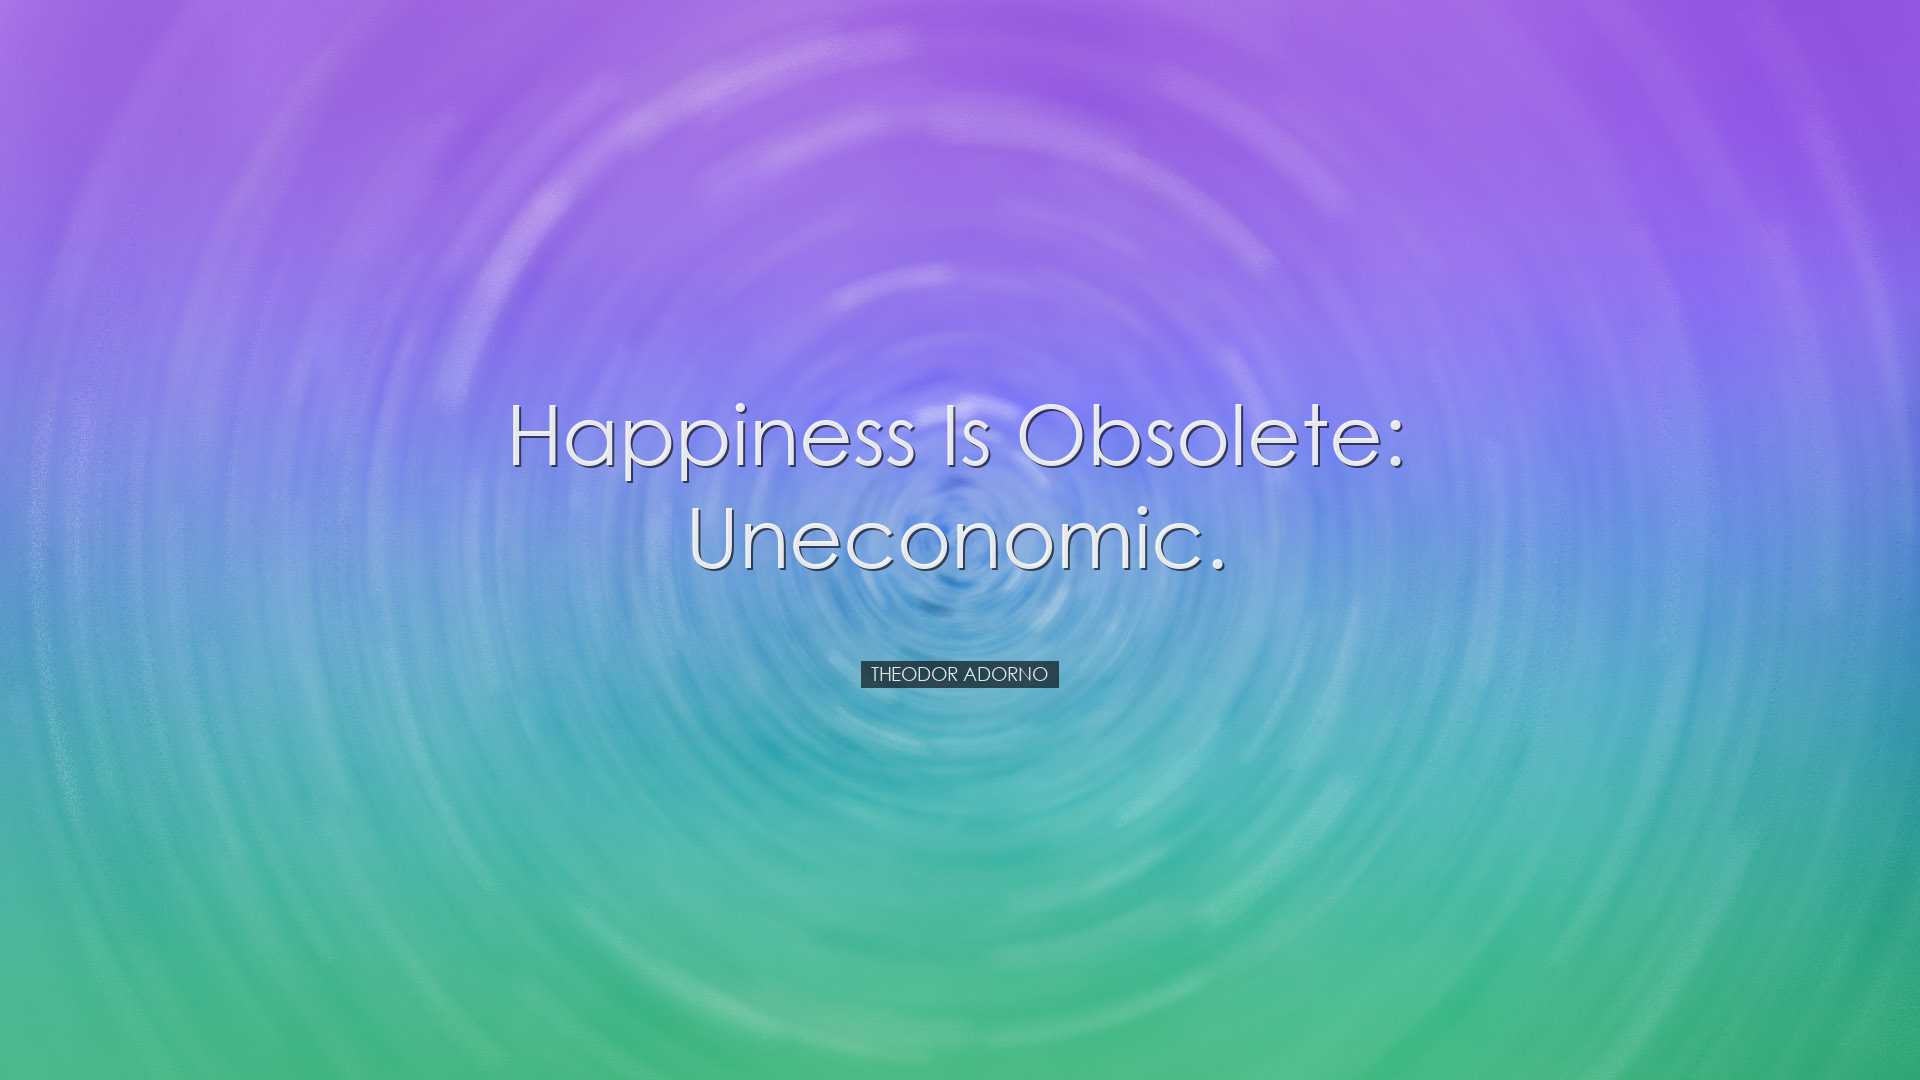 Happiness is obsolete: uneconomic. - Theodor Adorno